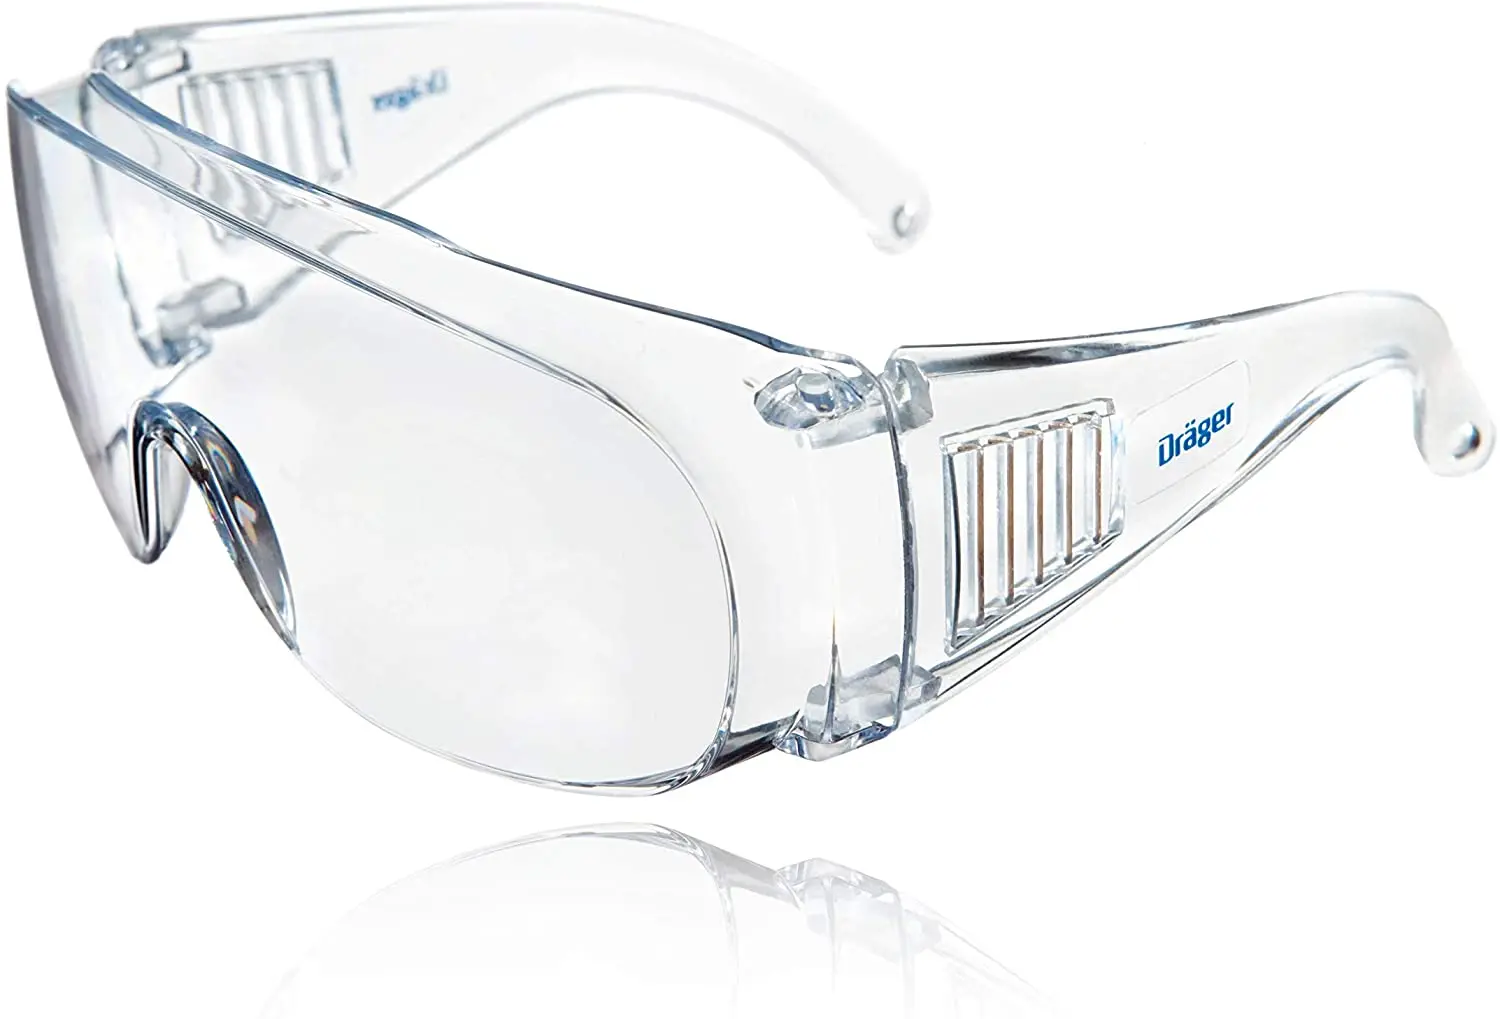 Drager очки защитные. Dräger очки солнцезащитные. Uvex Drager цена. Pect.